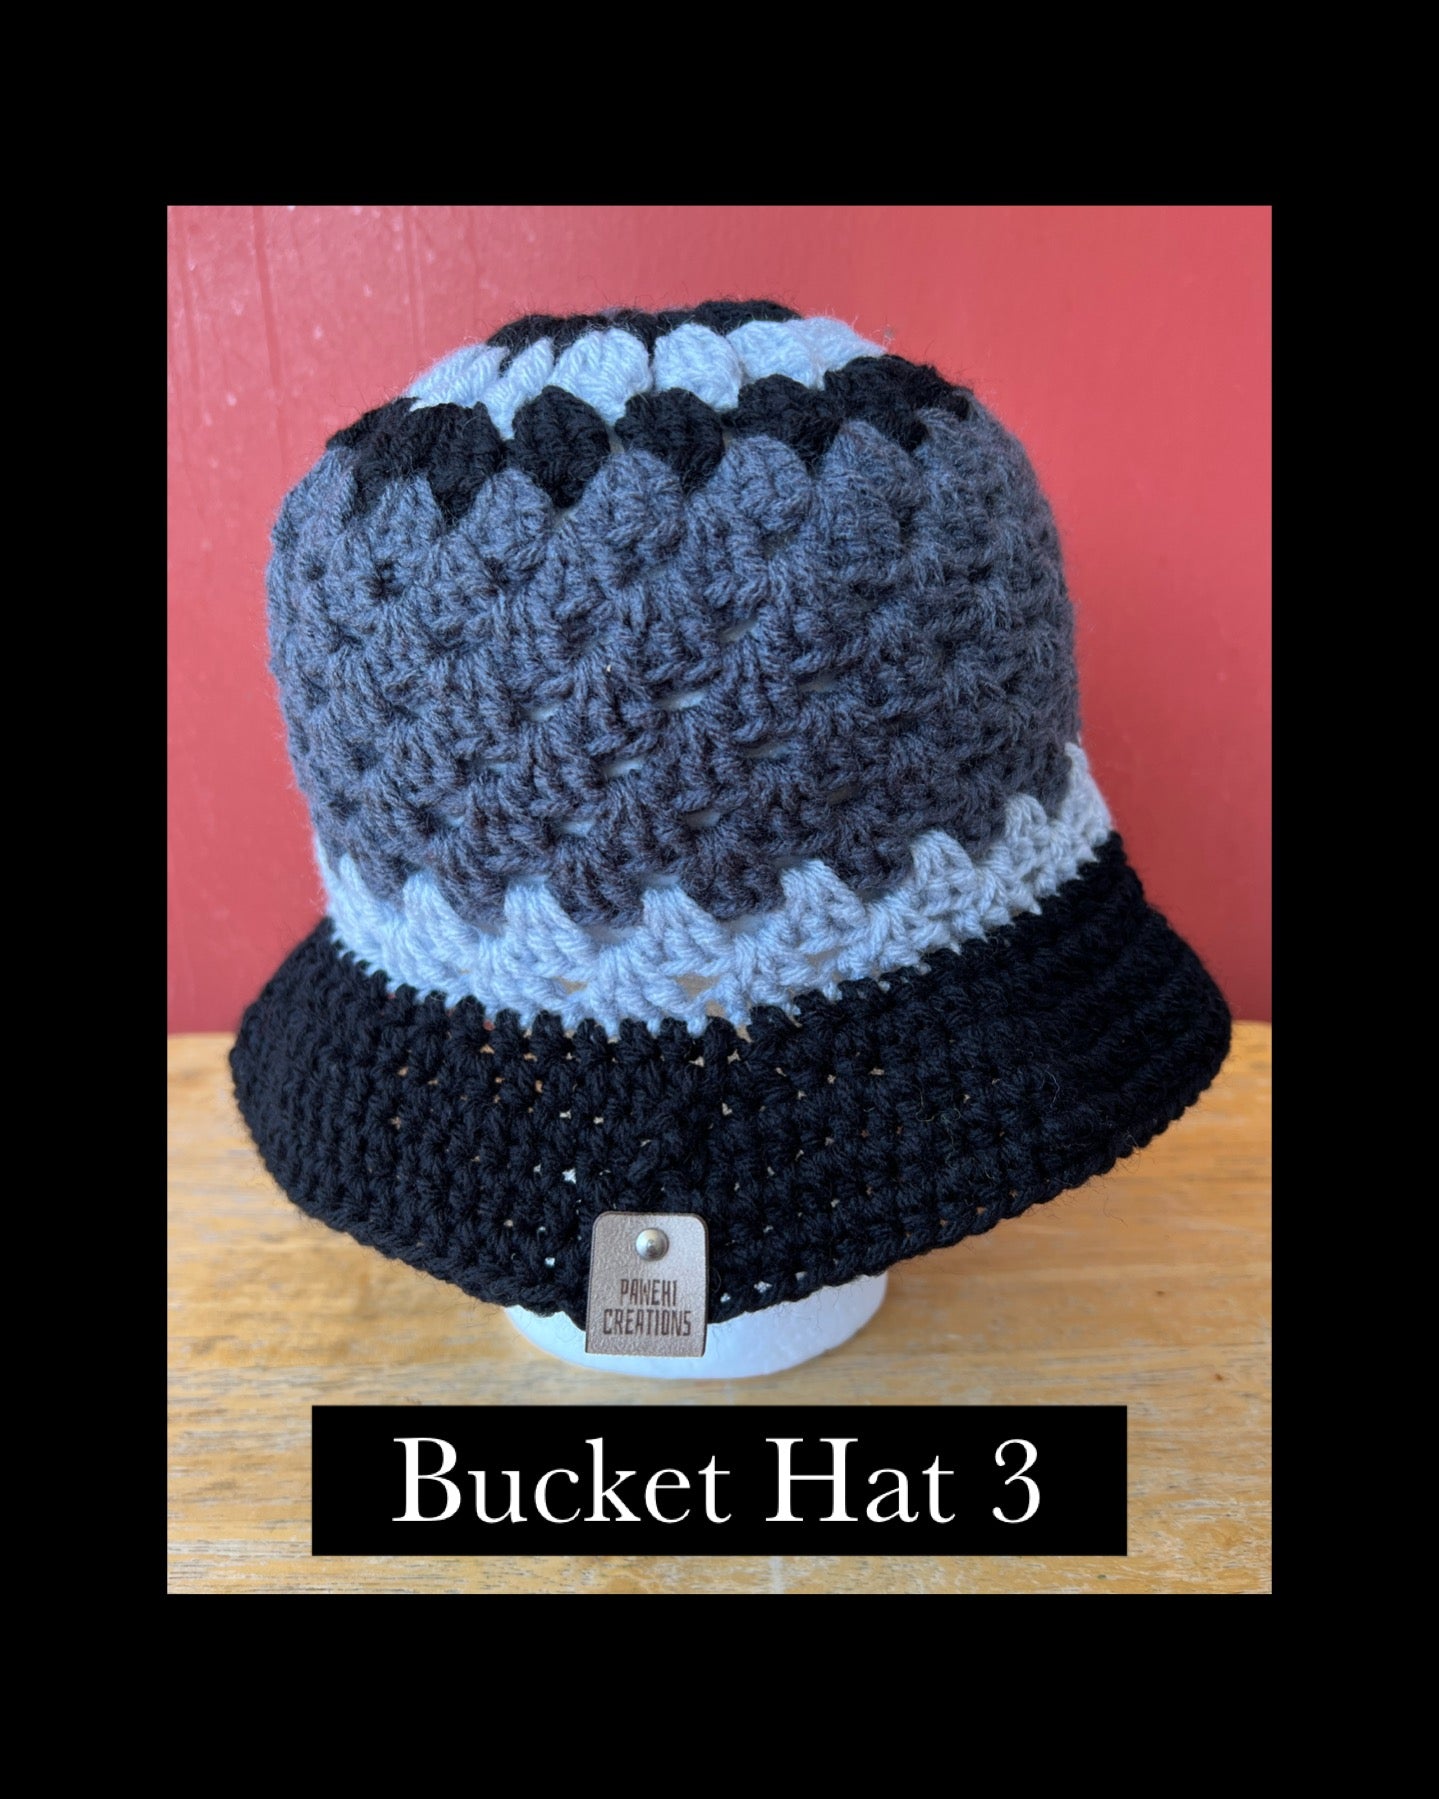 Pop-Up Mākeke - Pawehi Creations - Crochet Bucket  Hat - Style #3